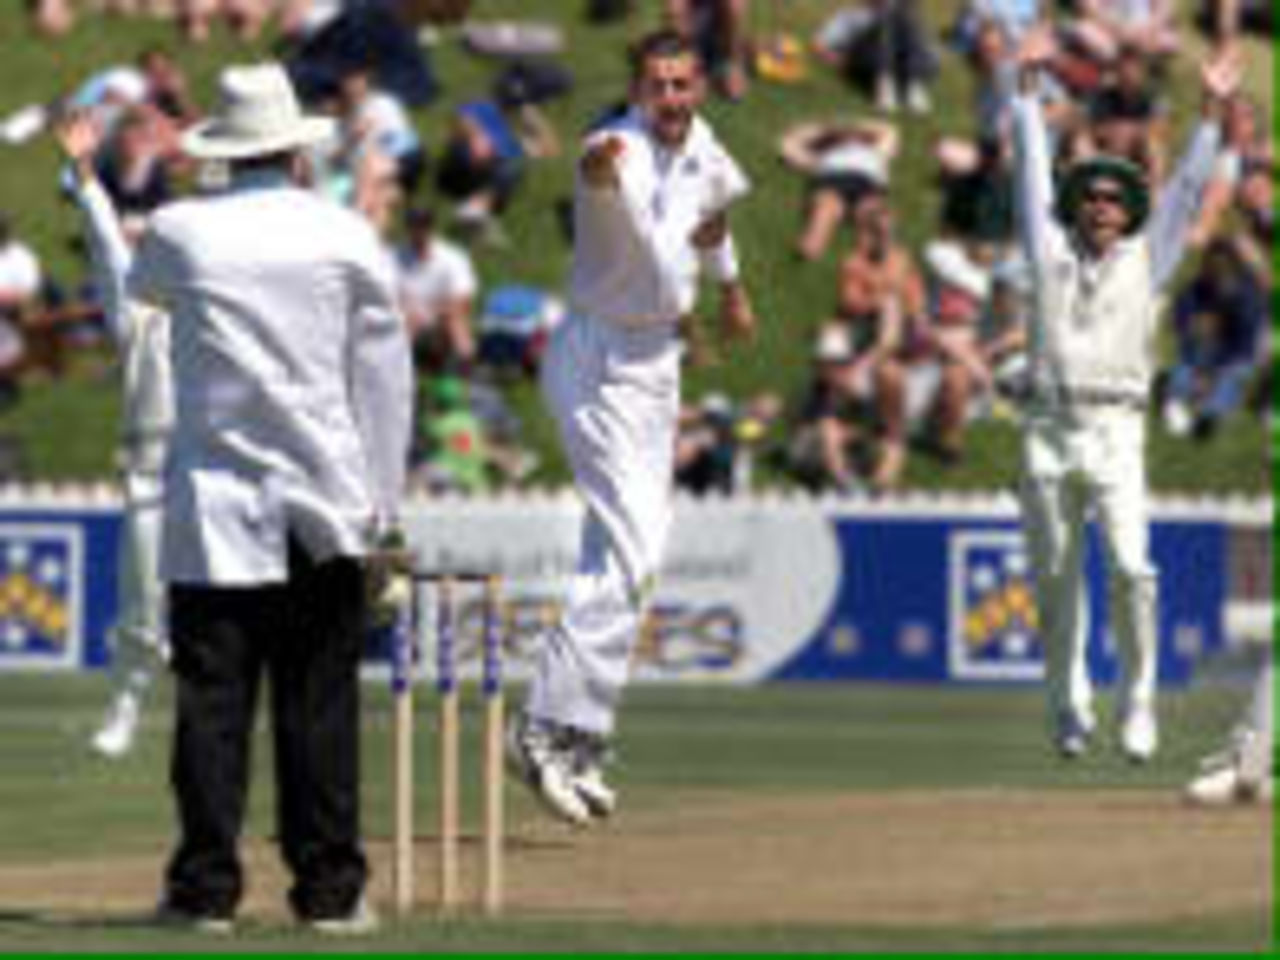 Doull dismisses Sidhu India in New Zealand, 1998/99, 2nd Test New Zealand v India Basin Reserve, Wellington 28 December 1998